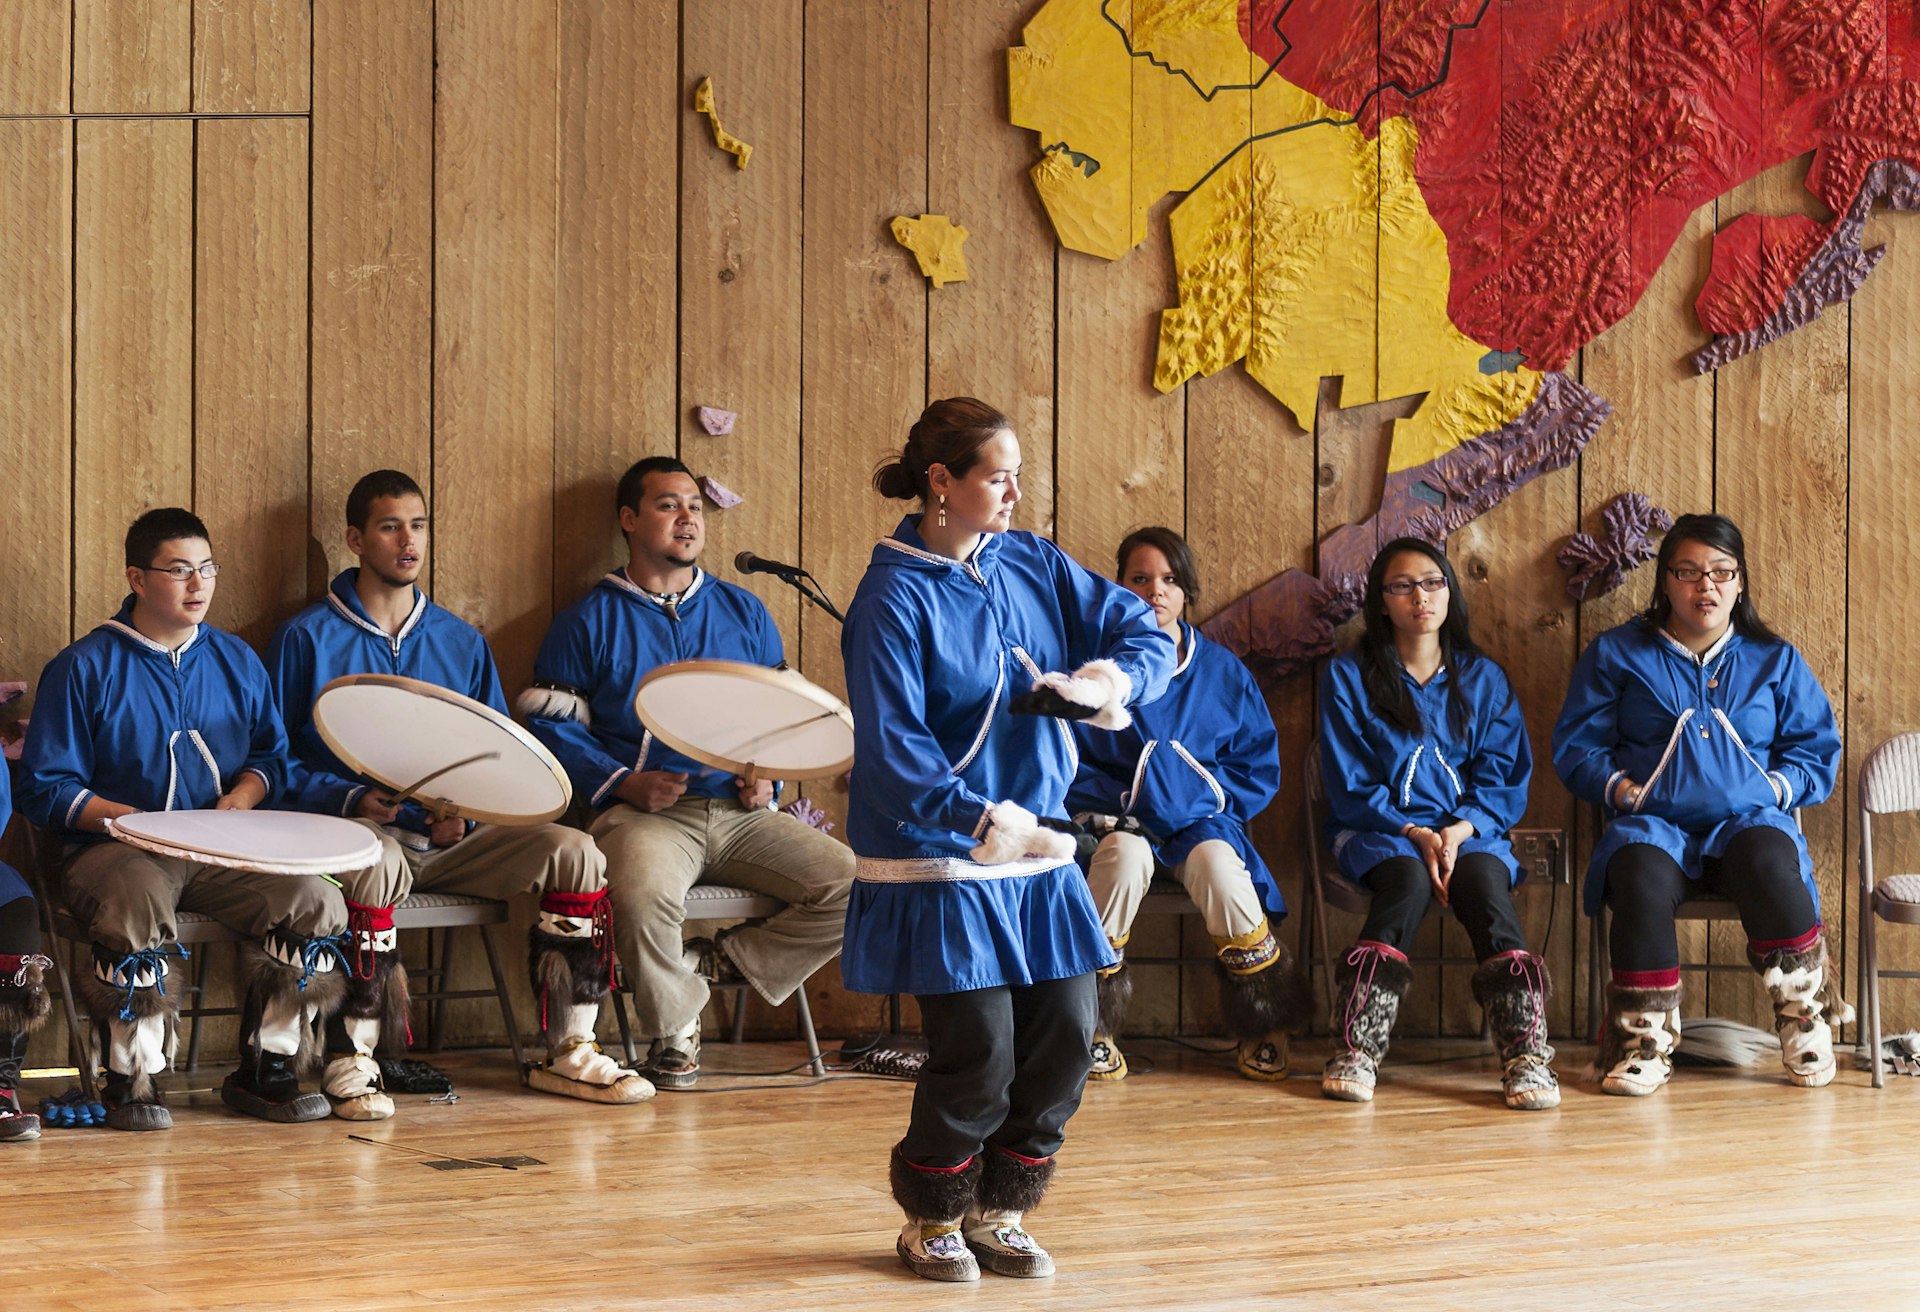 Alaska Native youths demonstrating traditional dance